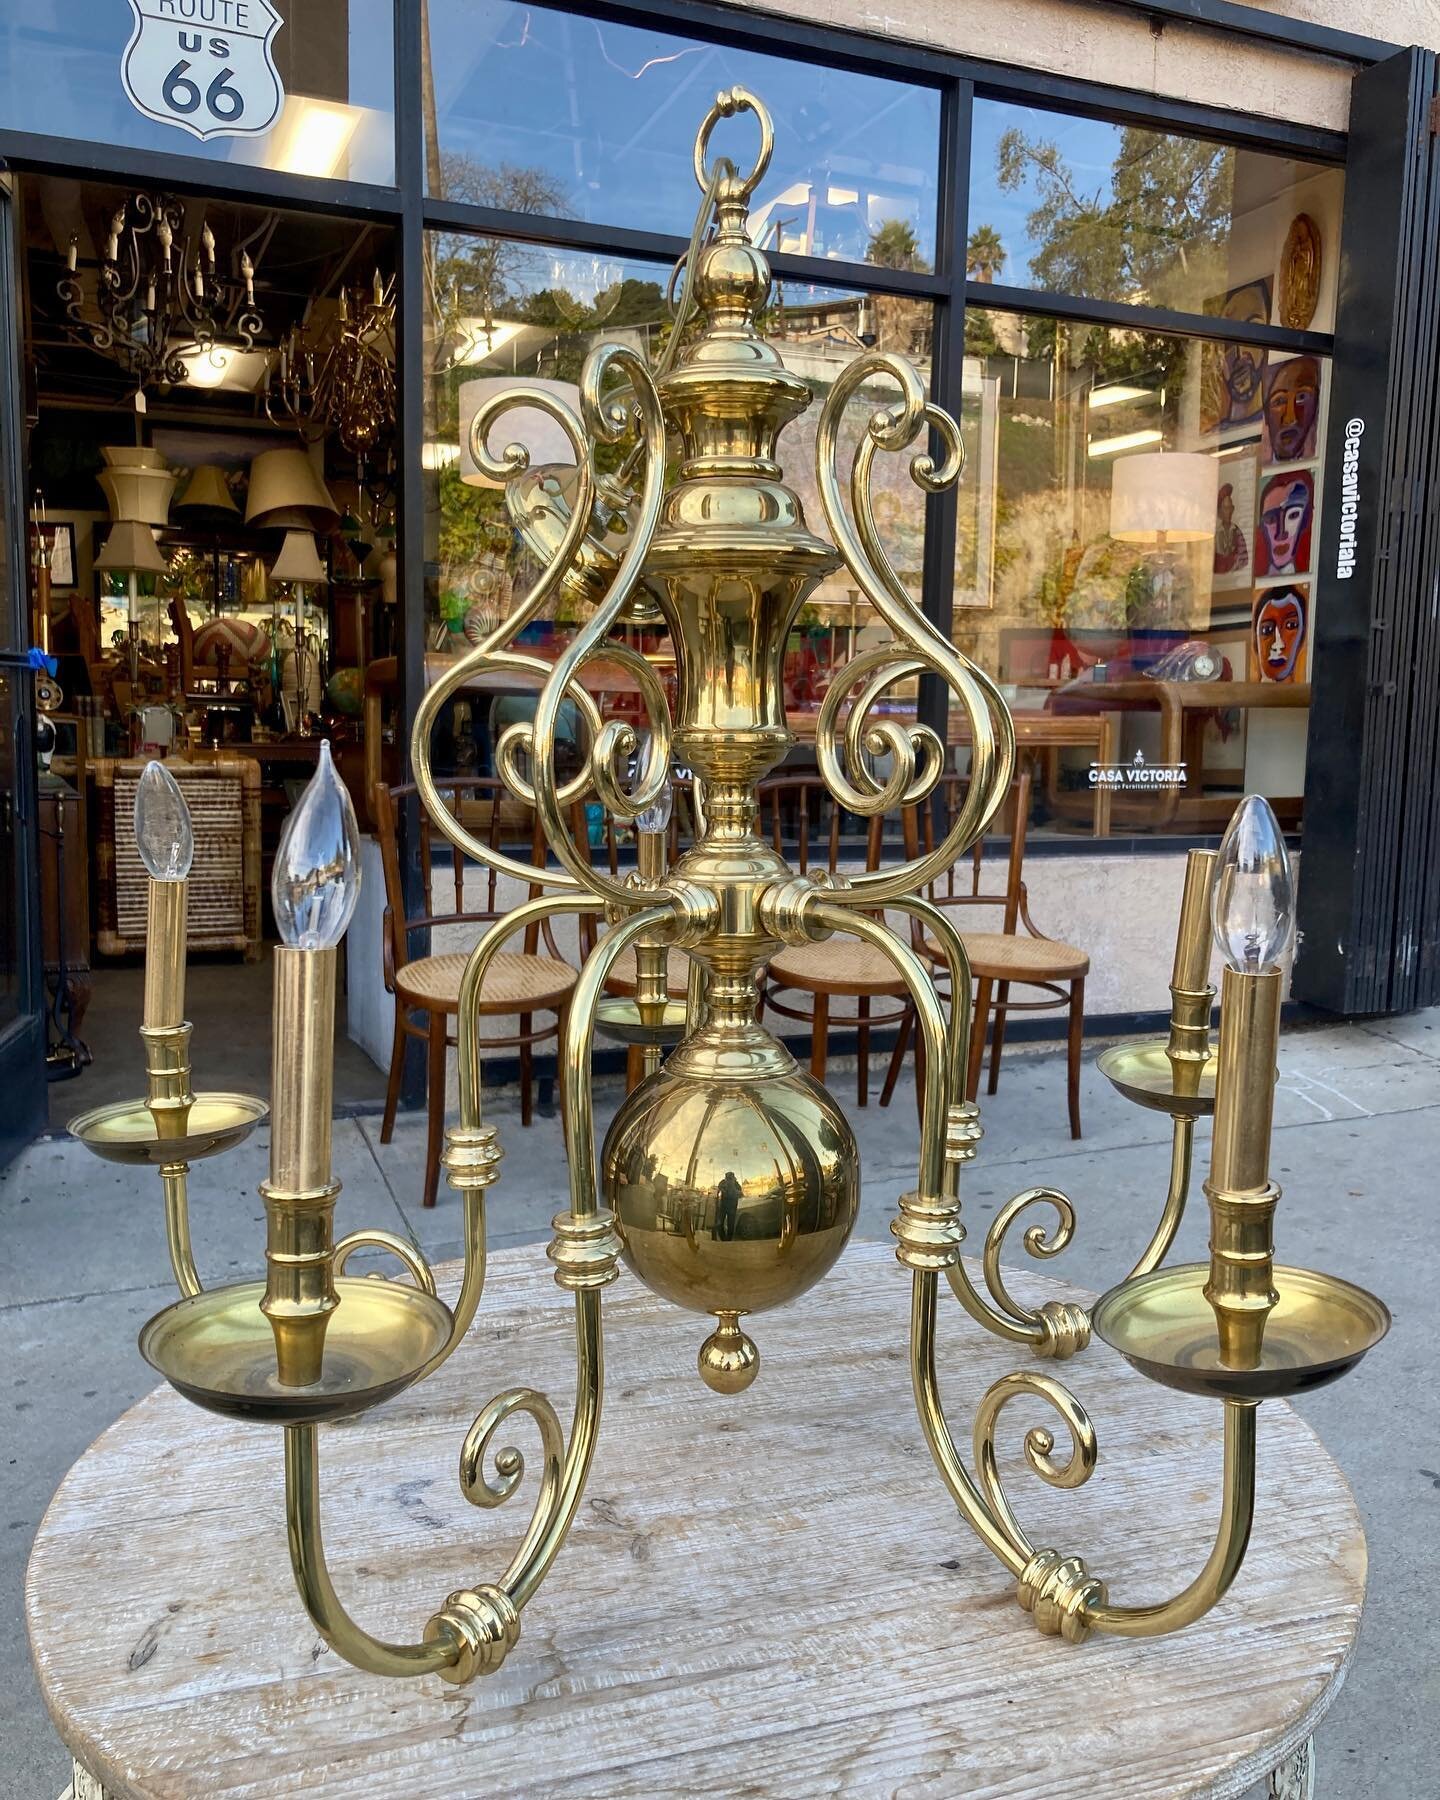 A classic five light chandelier in brass, $395. 30 w x 30 t. #casavictoriala #vintage #furniture #lighting #chandelier #setdesign #setdecorator #hollywood #bollywood #chairish #etsy #1stdibs #nyc #losangeles #hollywood #interiordesign #light #thanksg